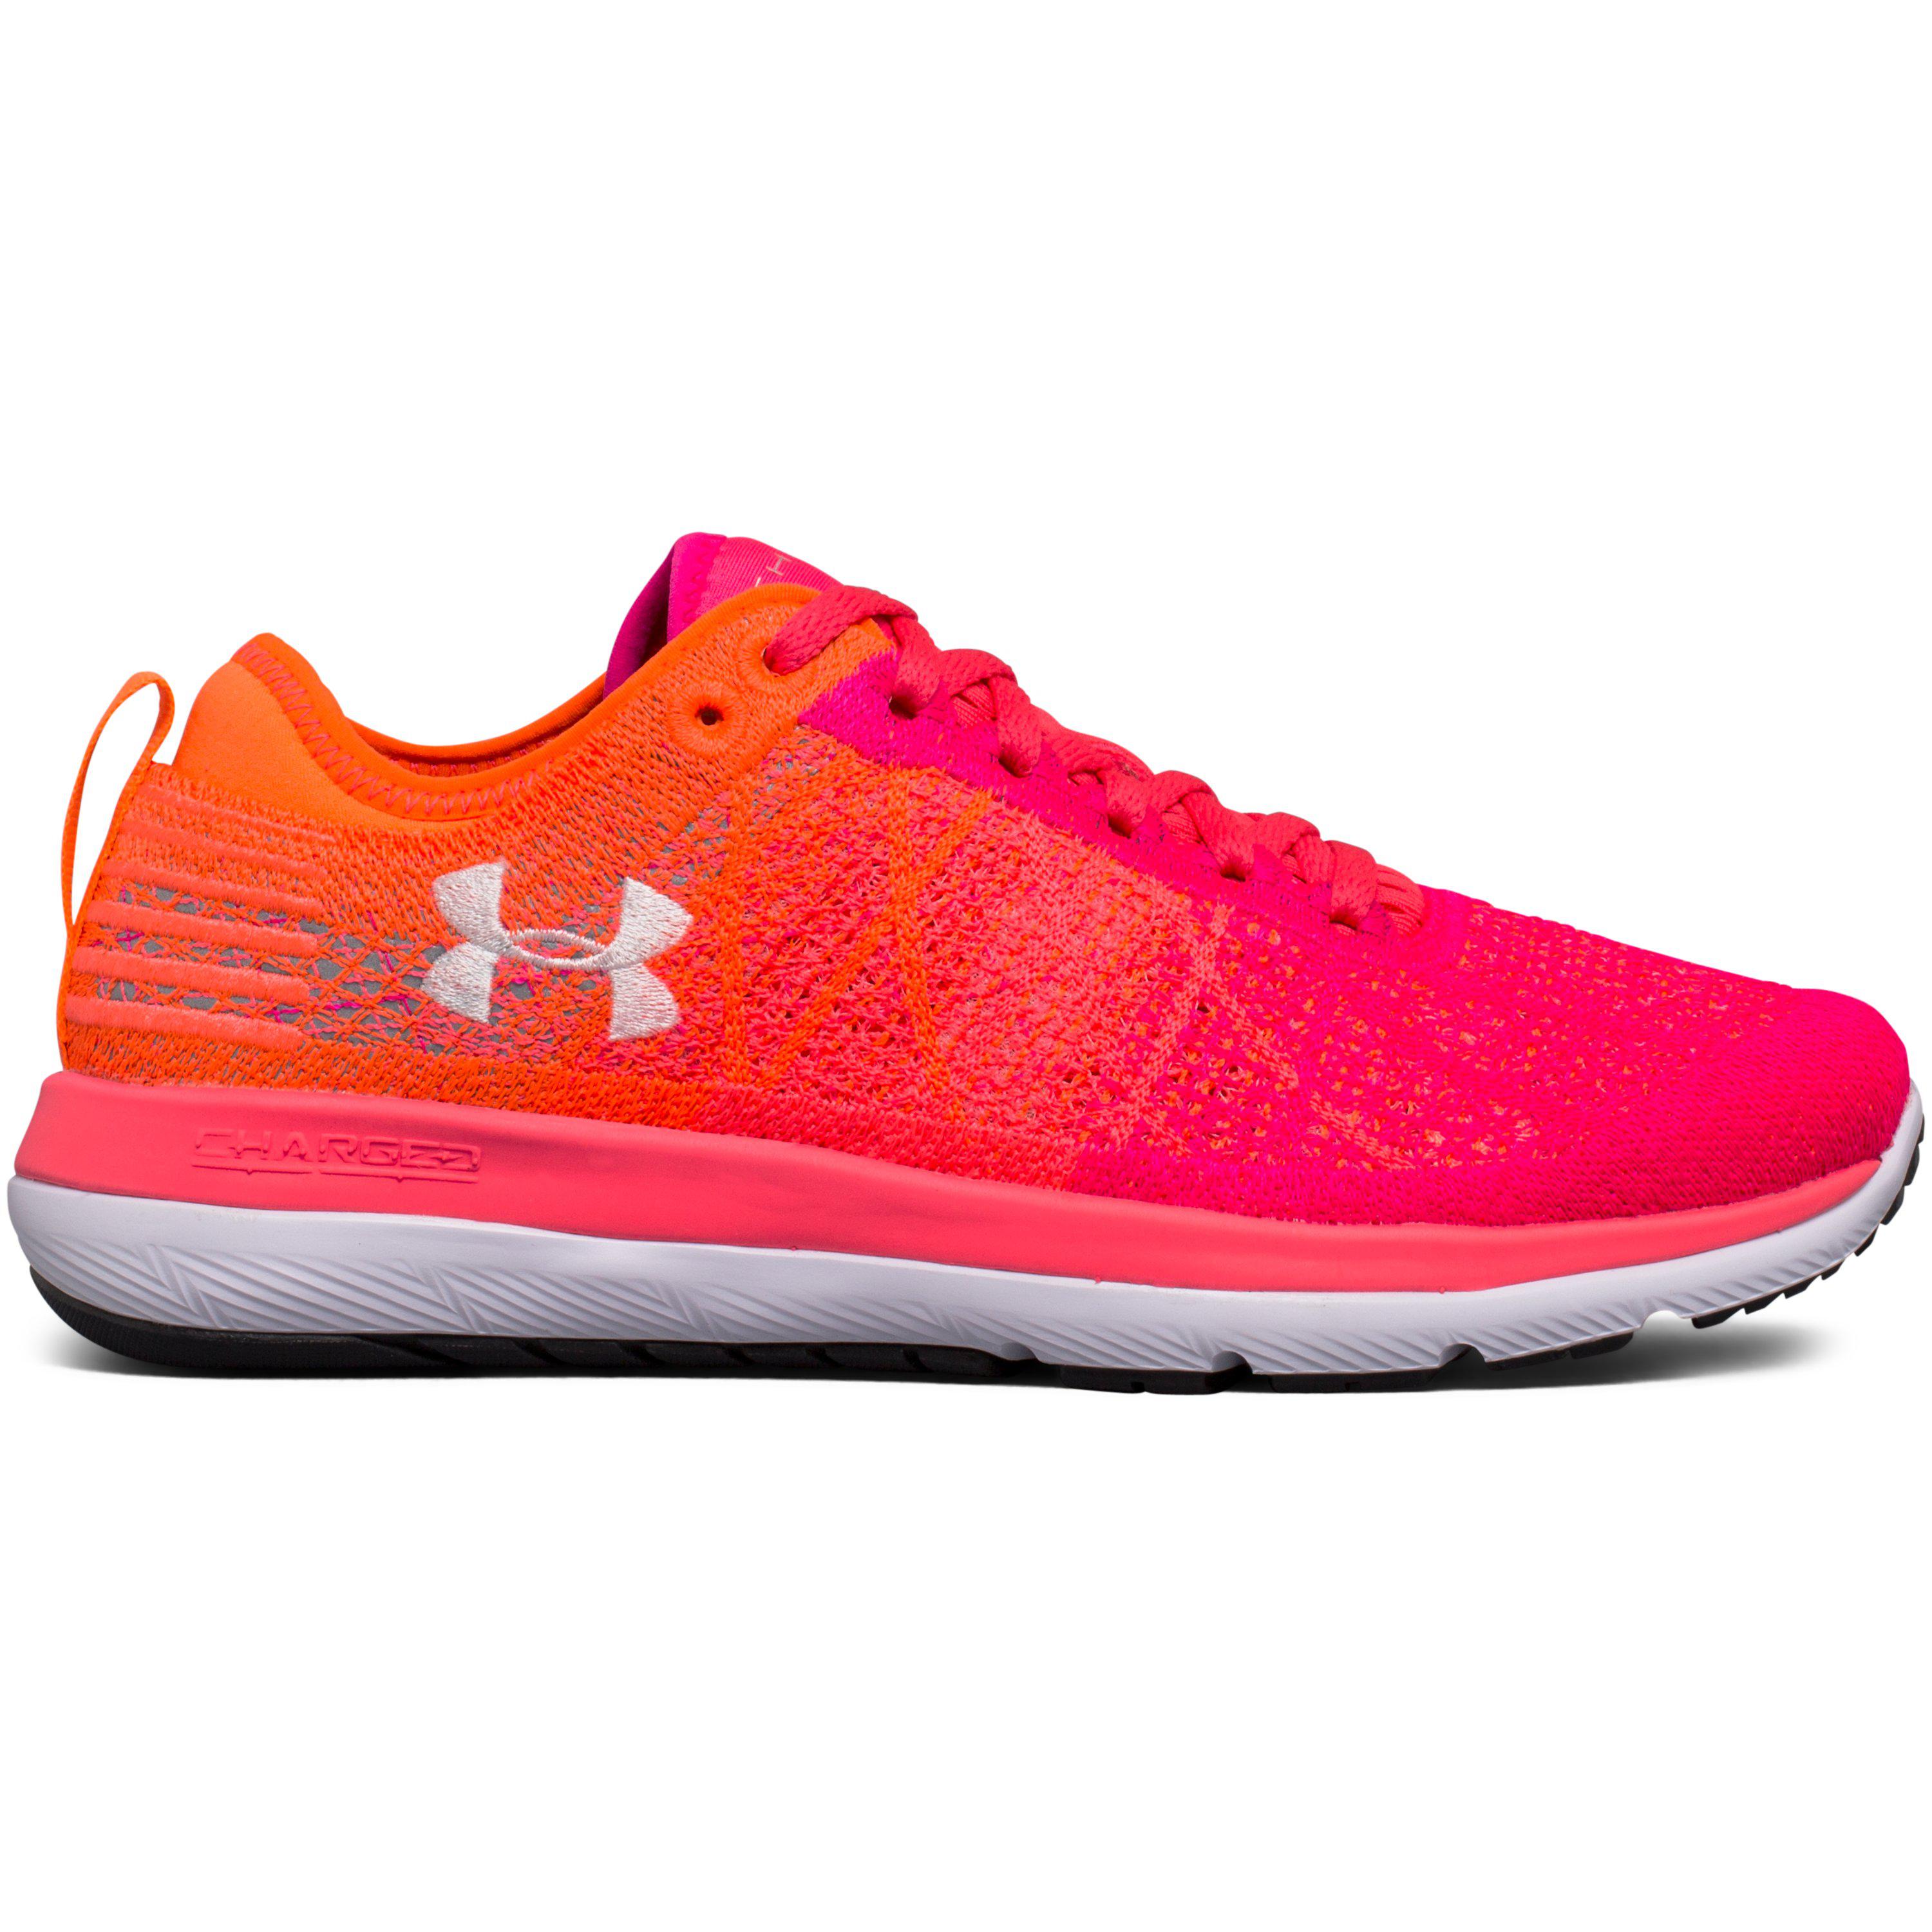 Lyst - Under Armour Women's Ua Threadborne Fortis 3 Running Shoes in Pink